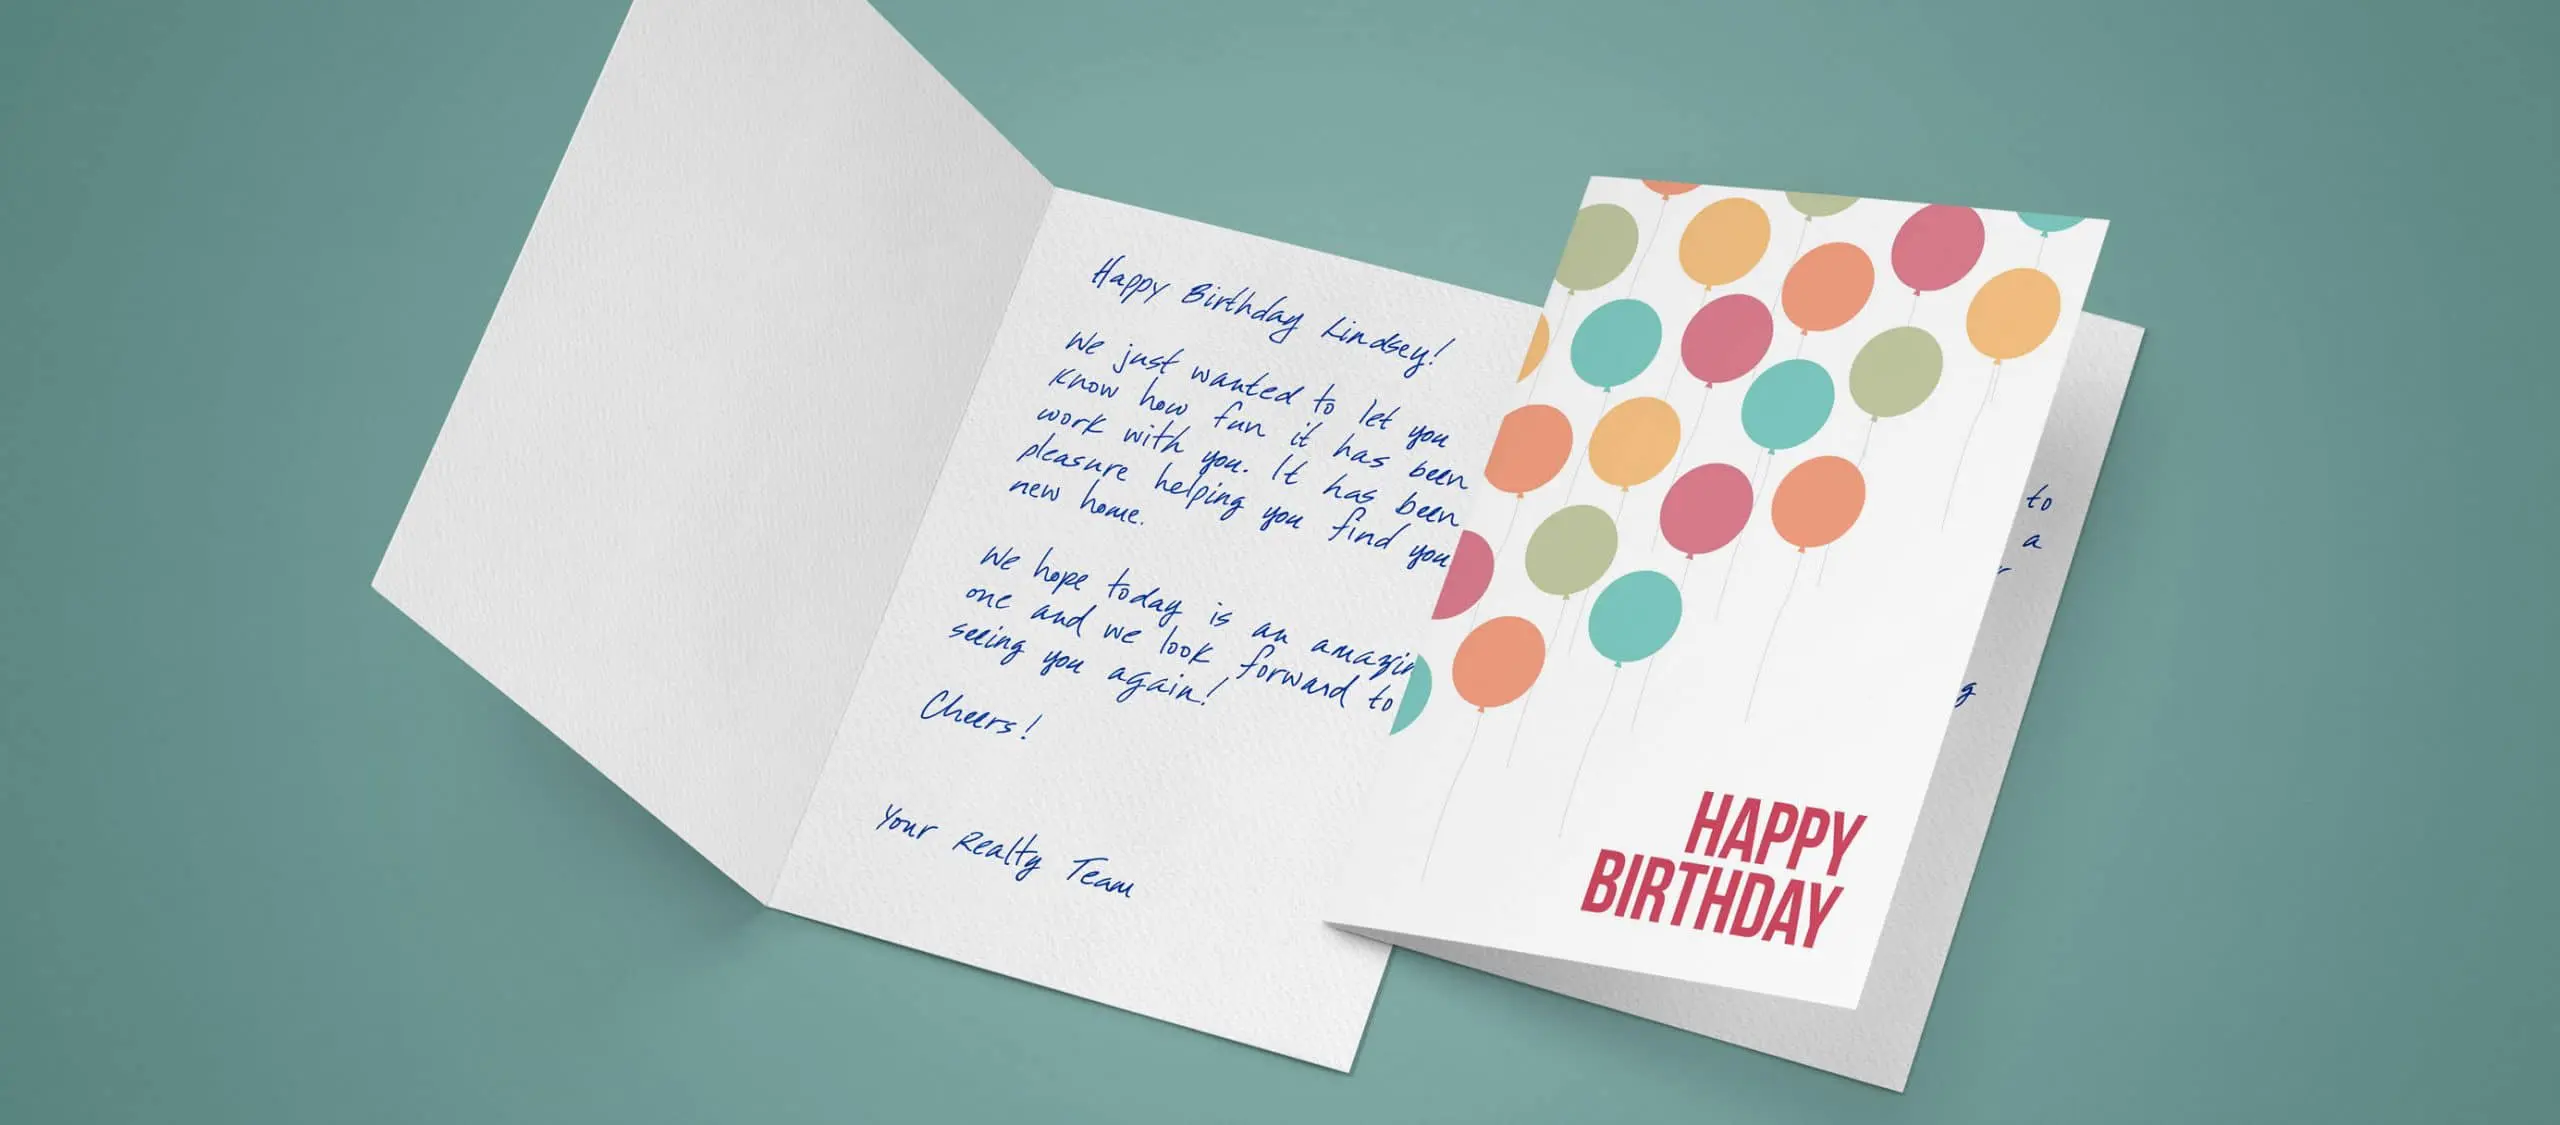 handwritten birthday card with balloons